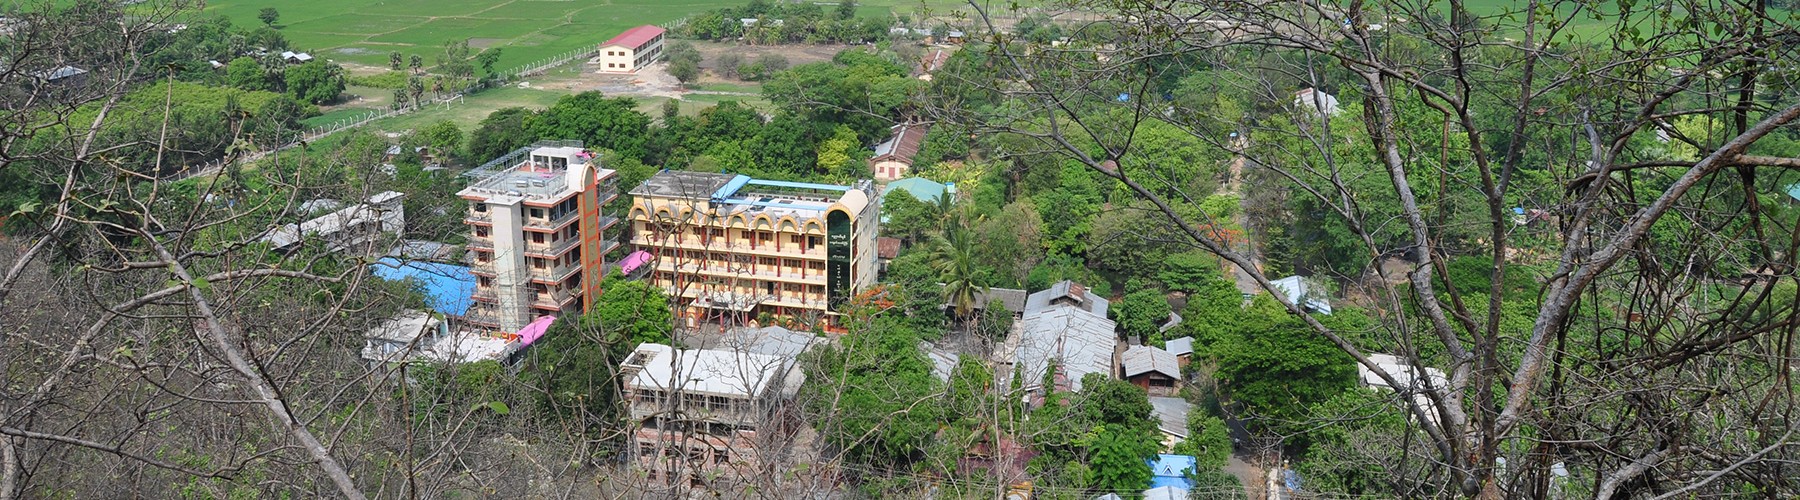 An aerial view of Oo Yin Pariyatti Monastery